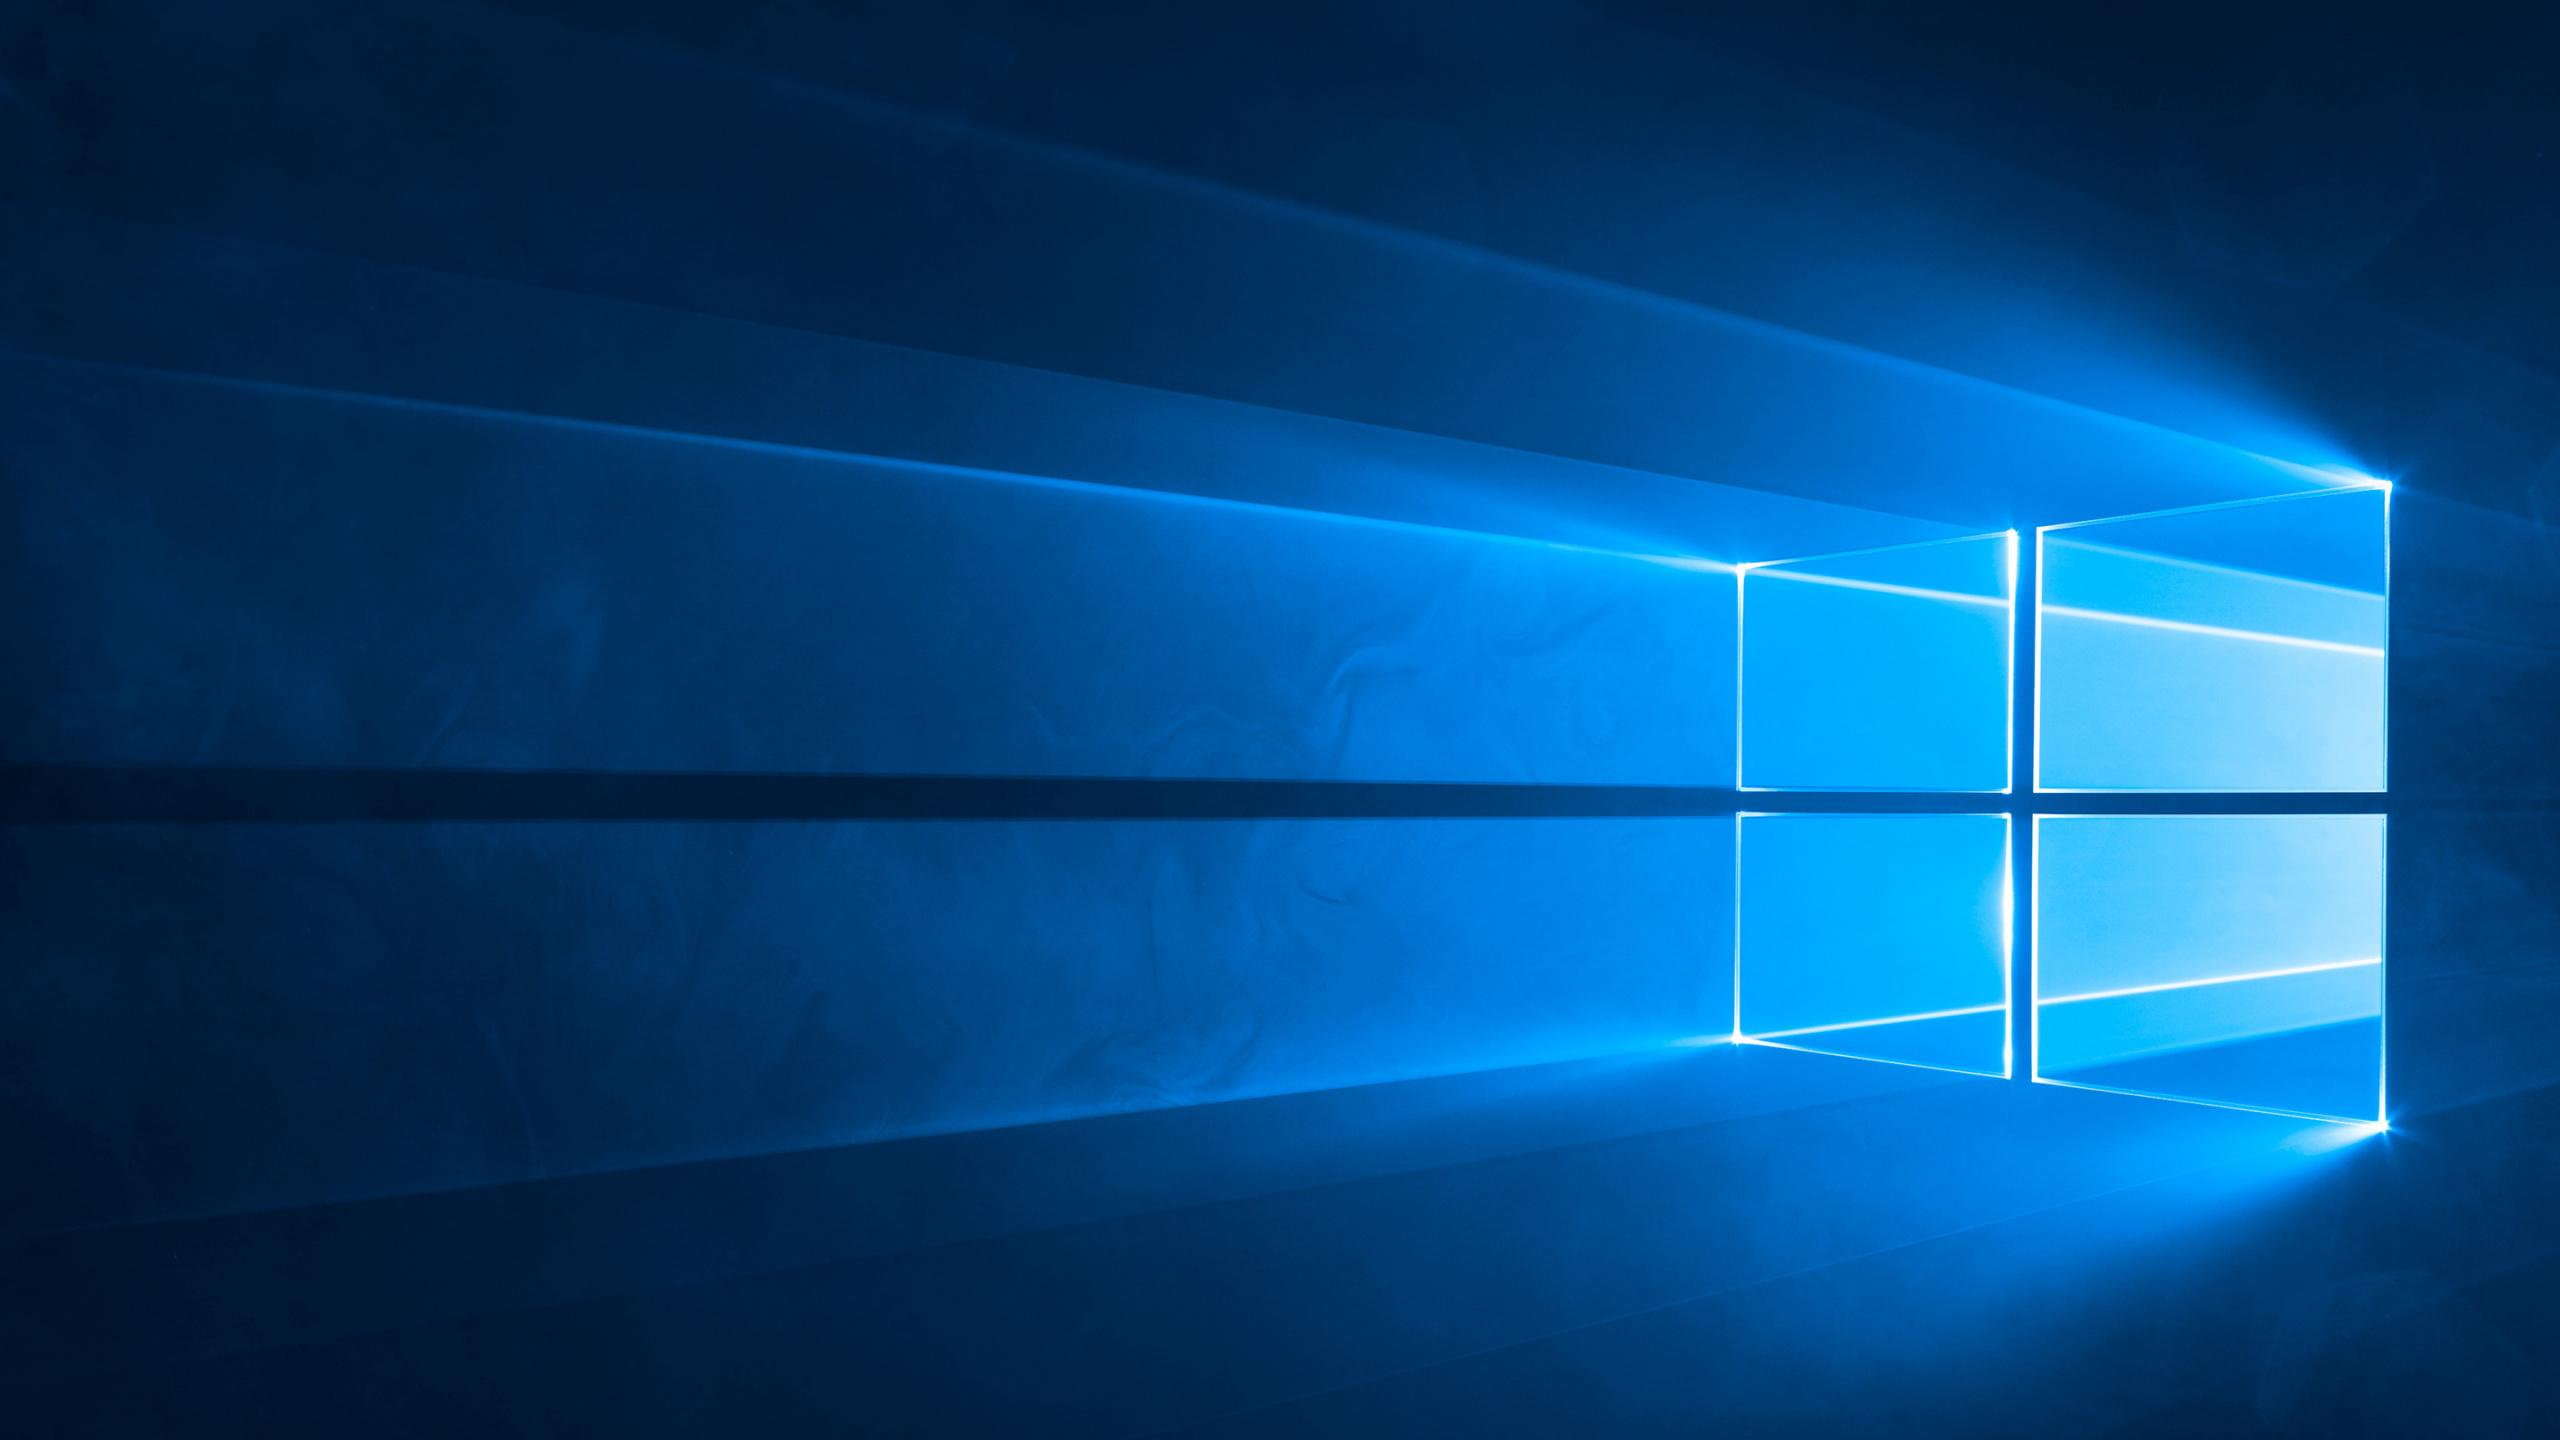 Windows10, Microsoft Windows, 微软公司, 视窗 10 S, 光 壁纸 2560x1440 允许